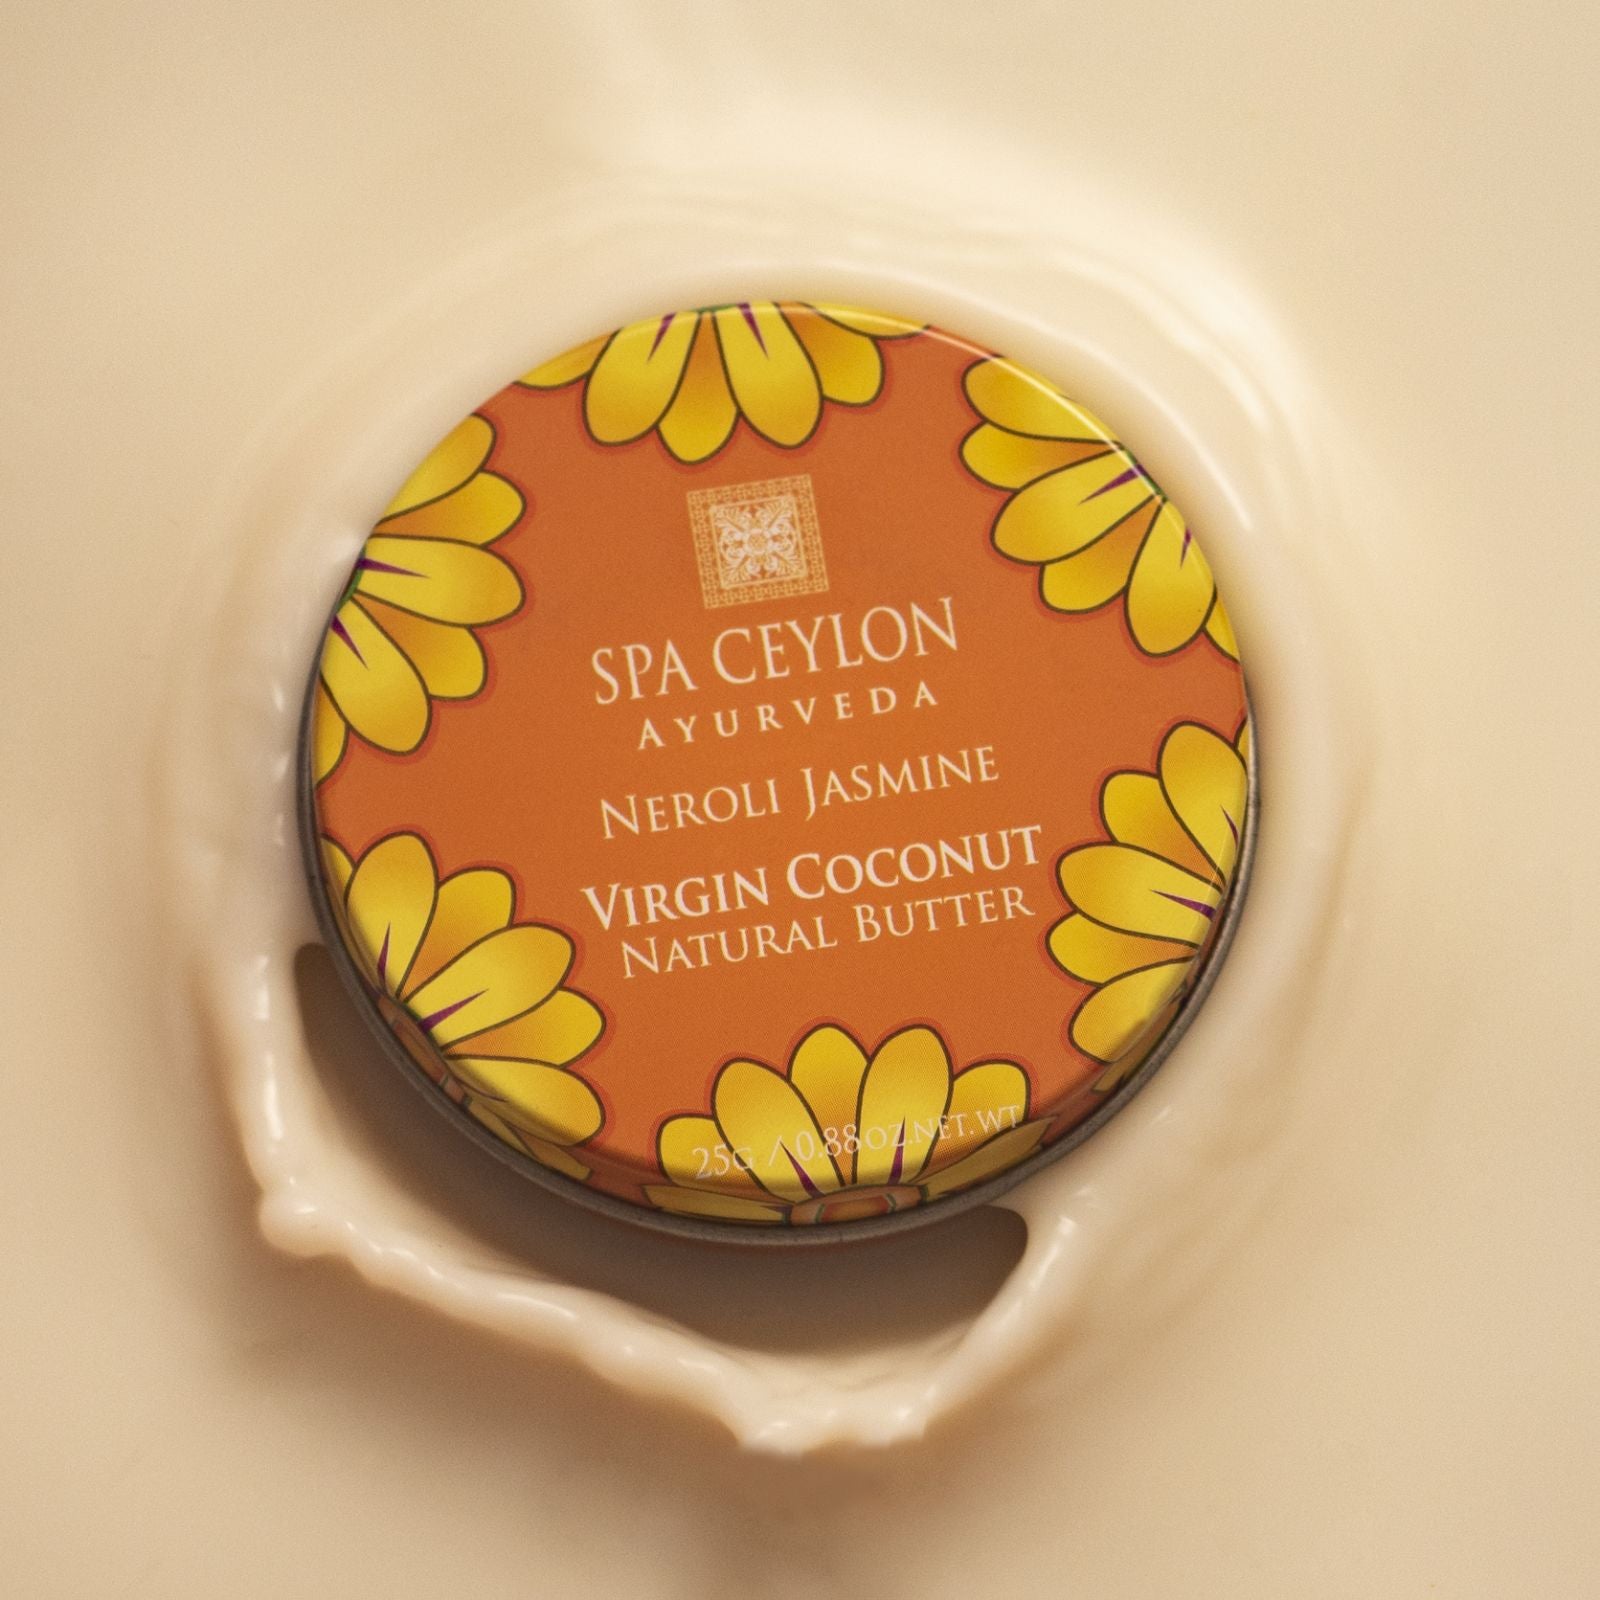 Neroli Jasmine - Virgin Coconut Natural Butter